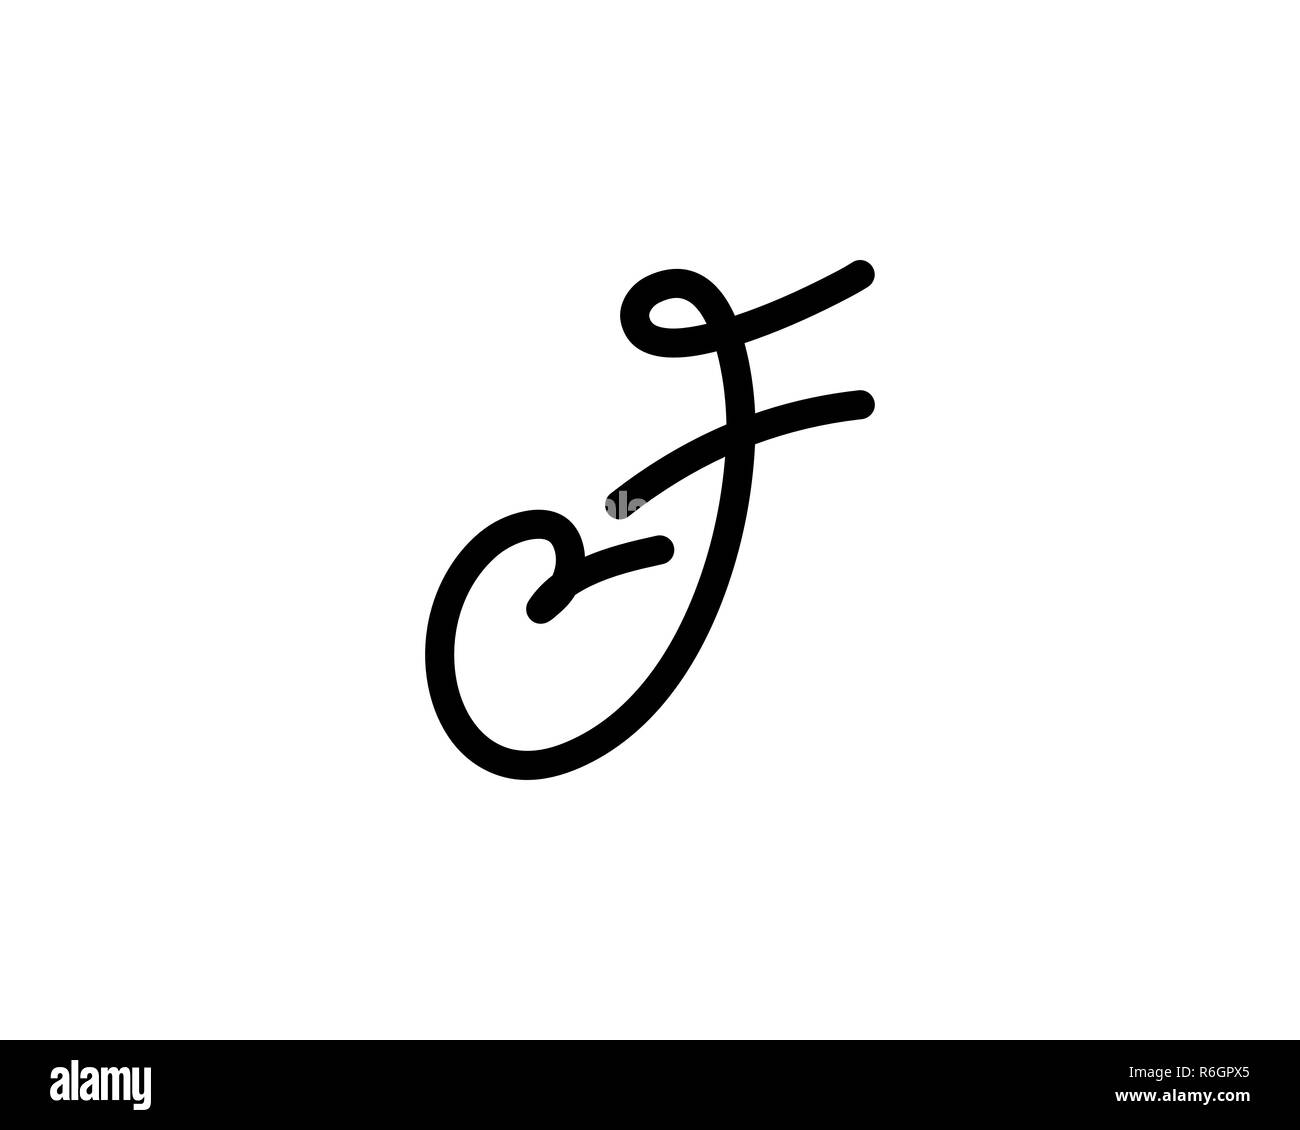 f letter signature logo Stock Photo - Alamy